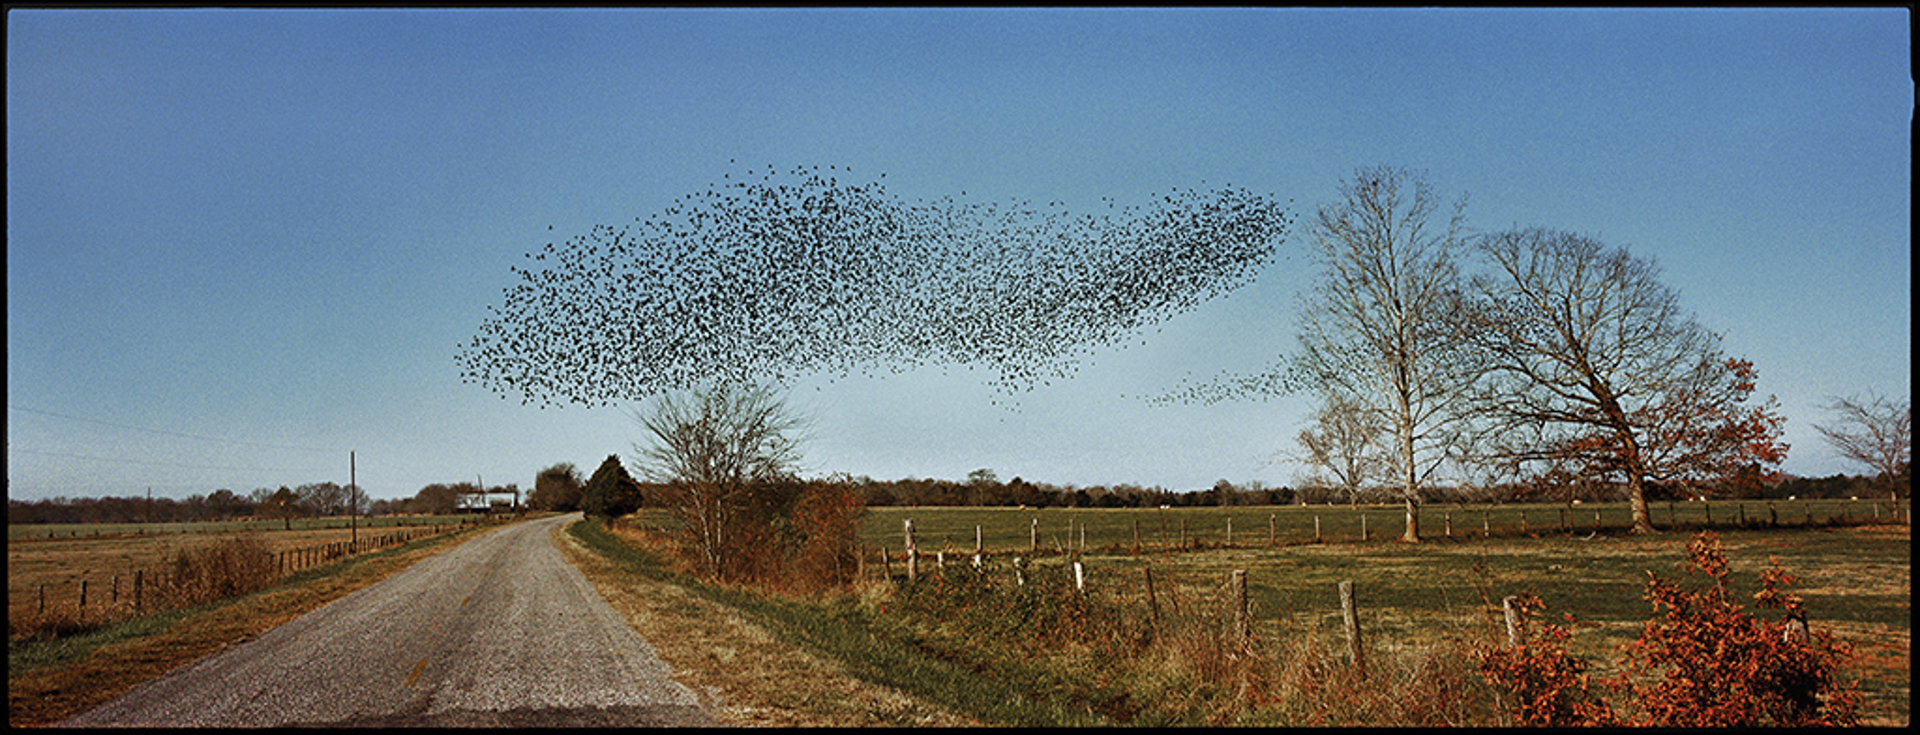 Birds, Perry County, AL by Jerry Siegel